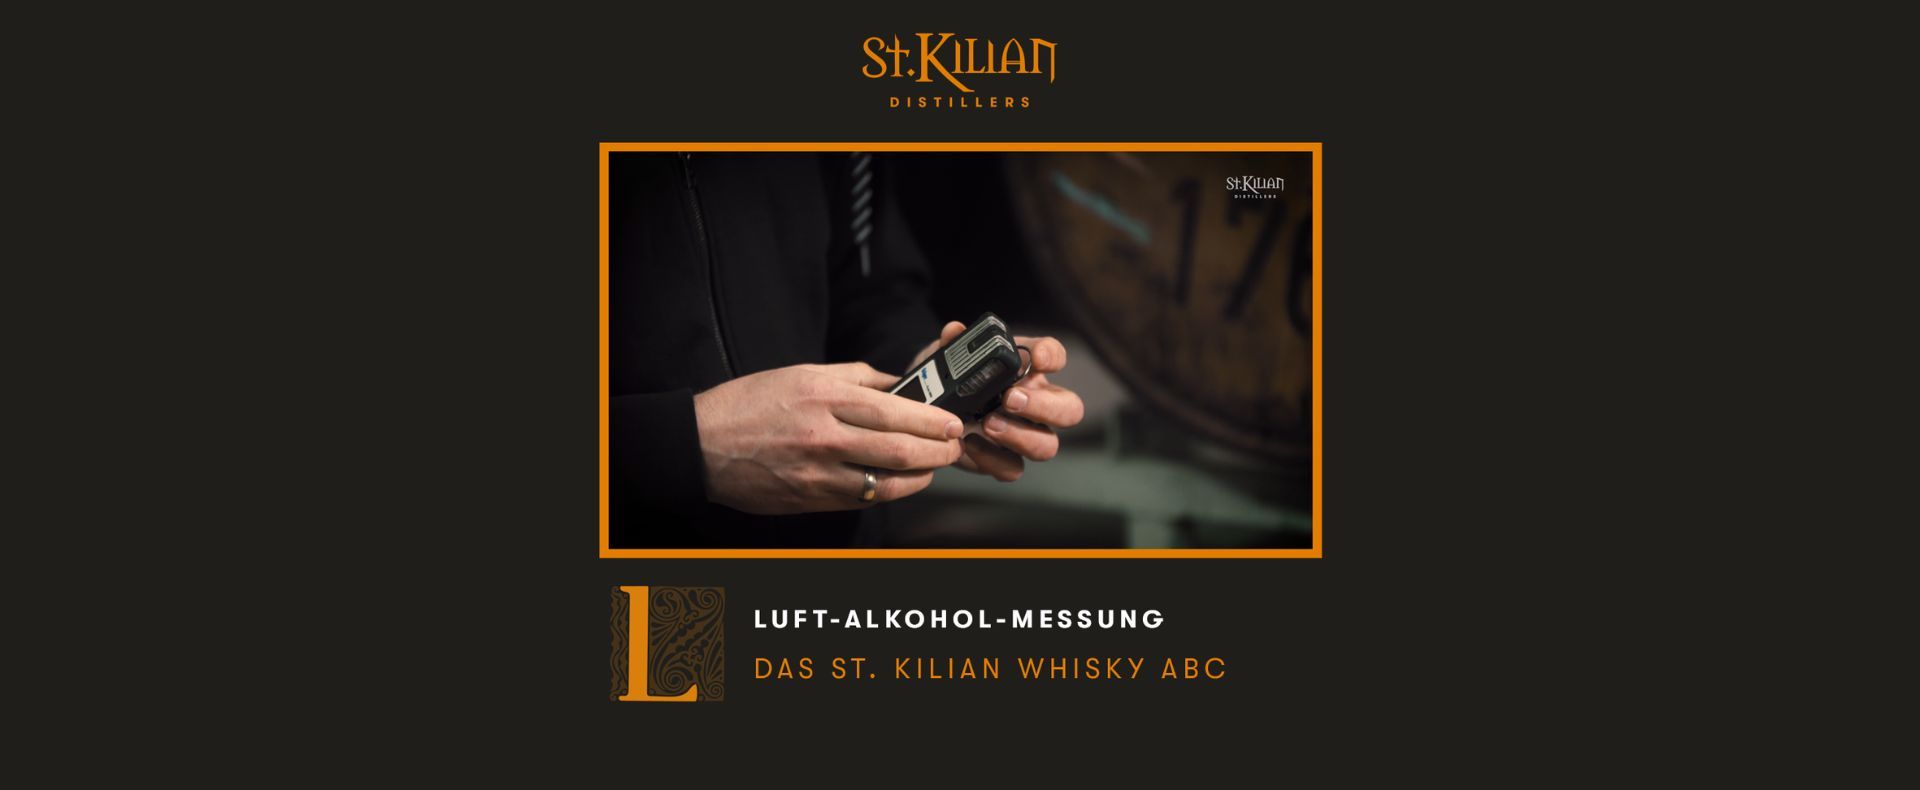 Whisky ABC - L wie Luft-Alkohol-Messung